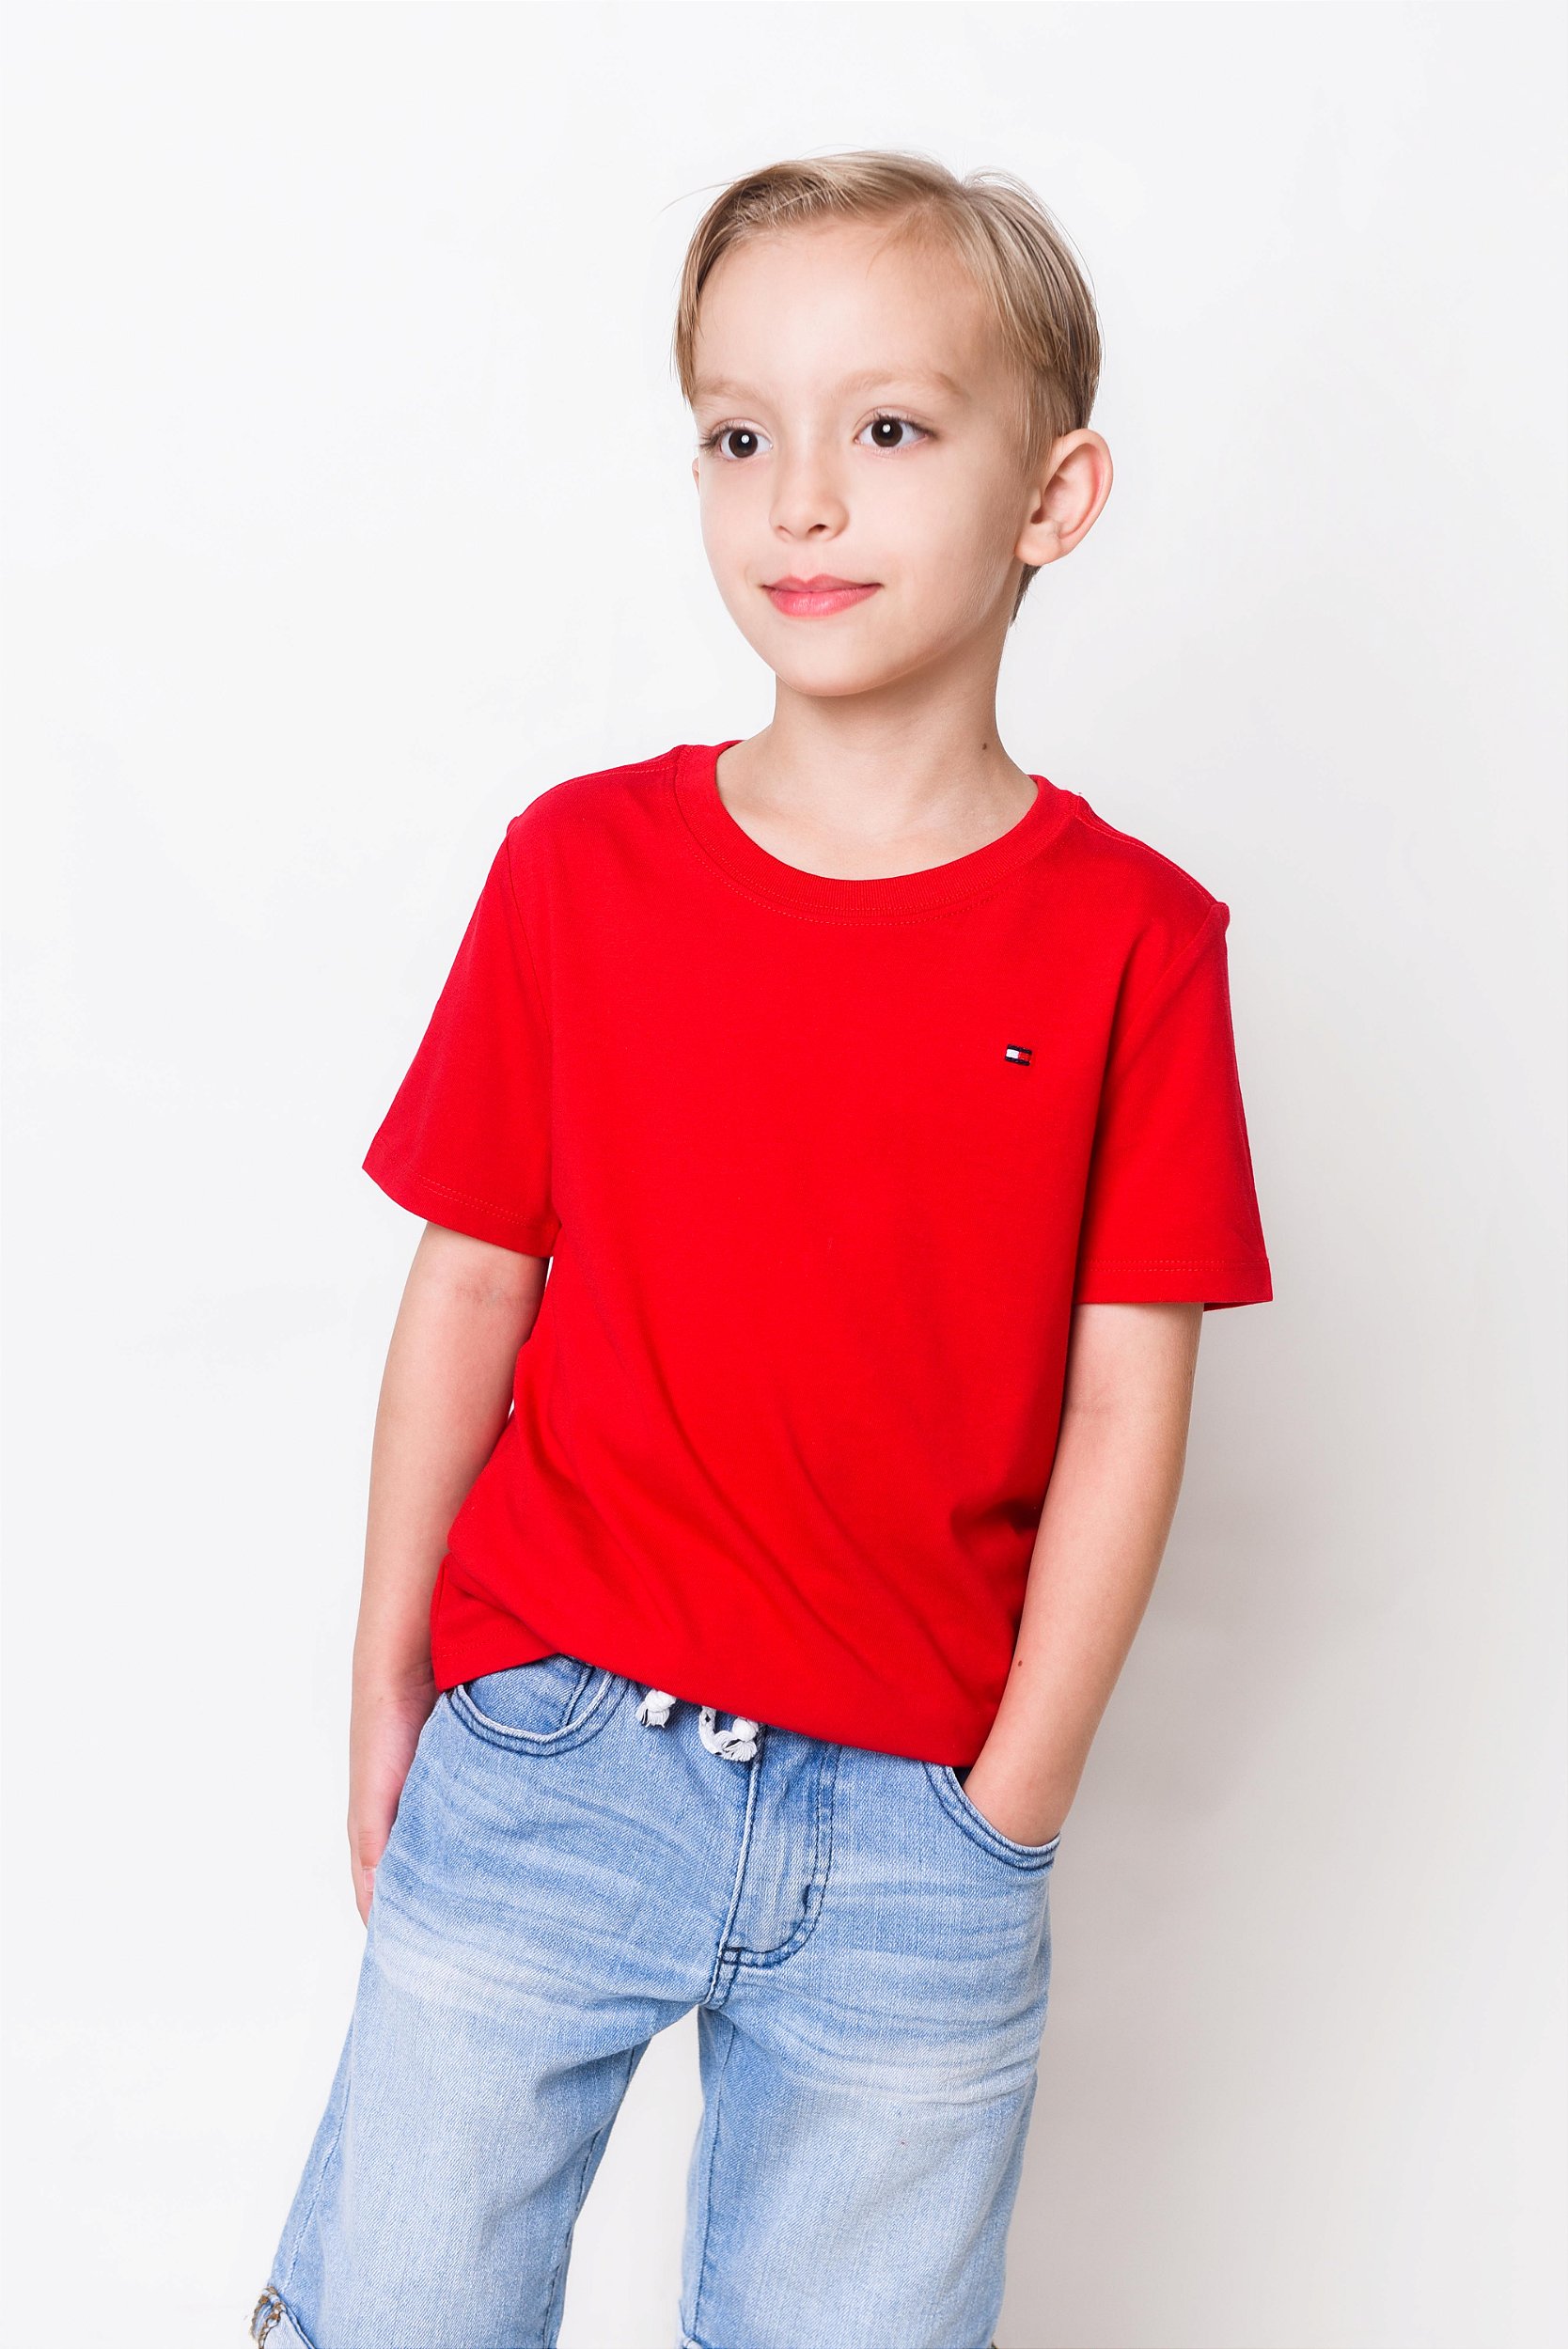 Camiseta Infantil Manga Curta Vermelha - Tommy Hilfiger - Alecrim Kids